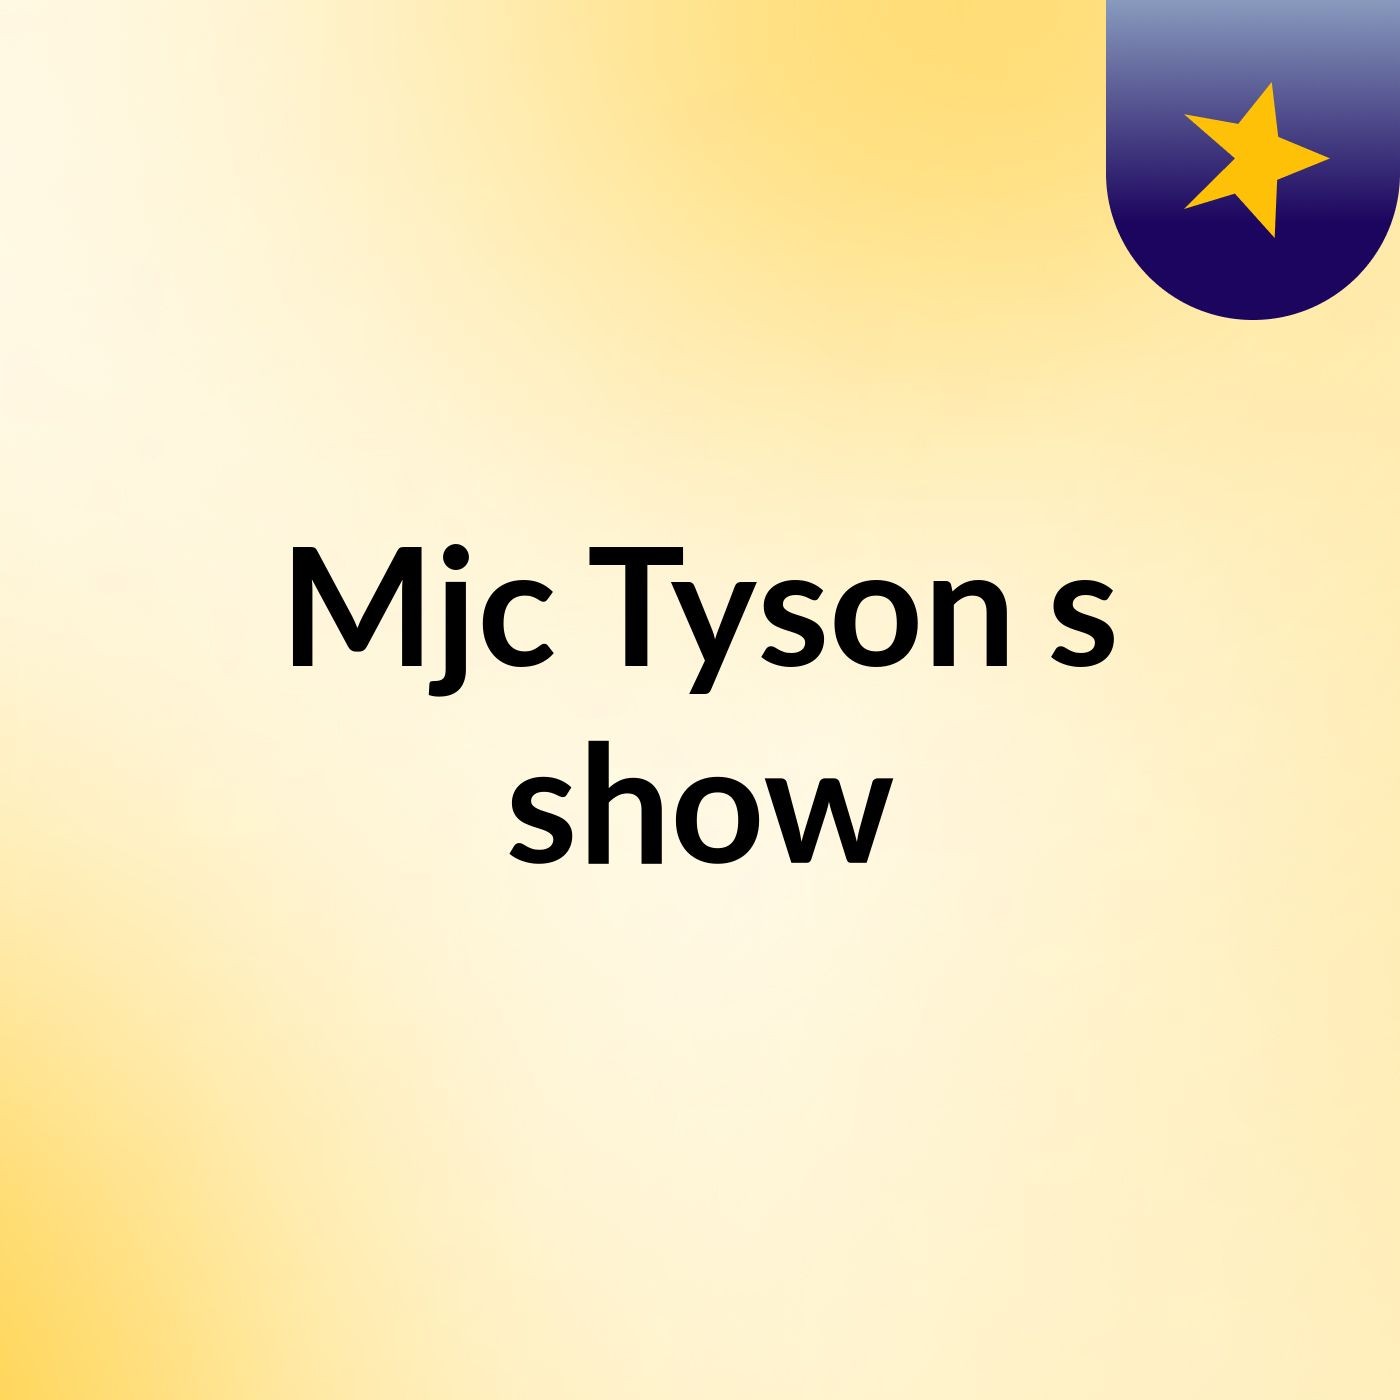 Mjc Tyson's show